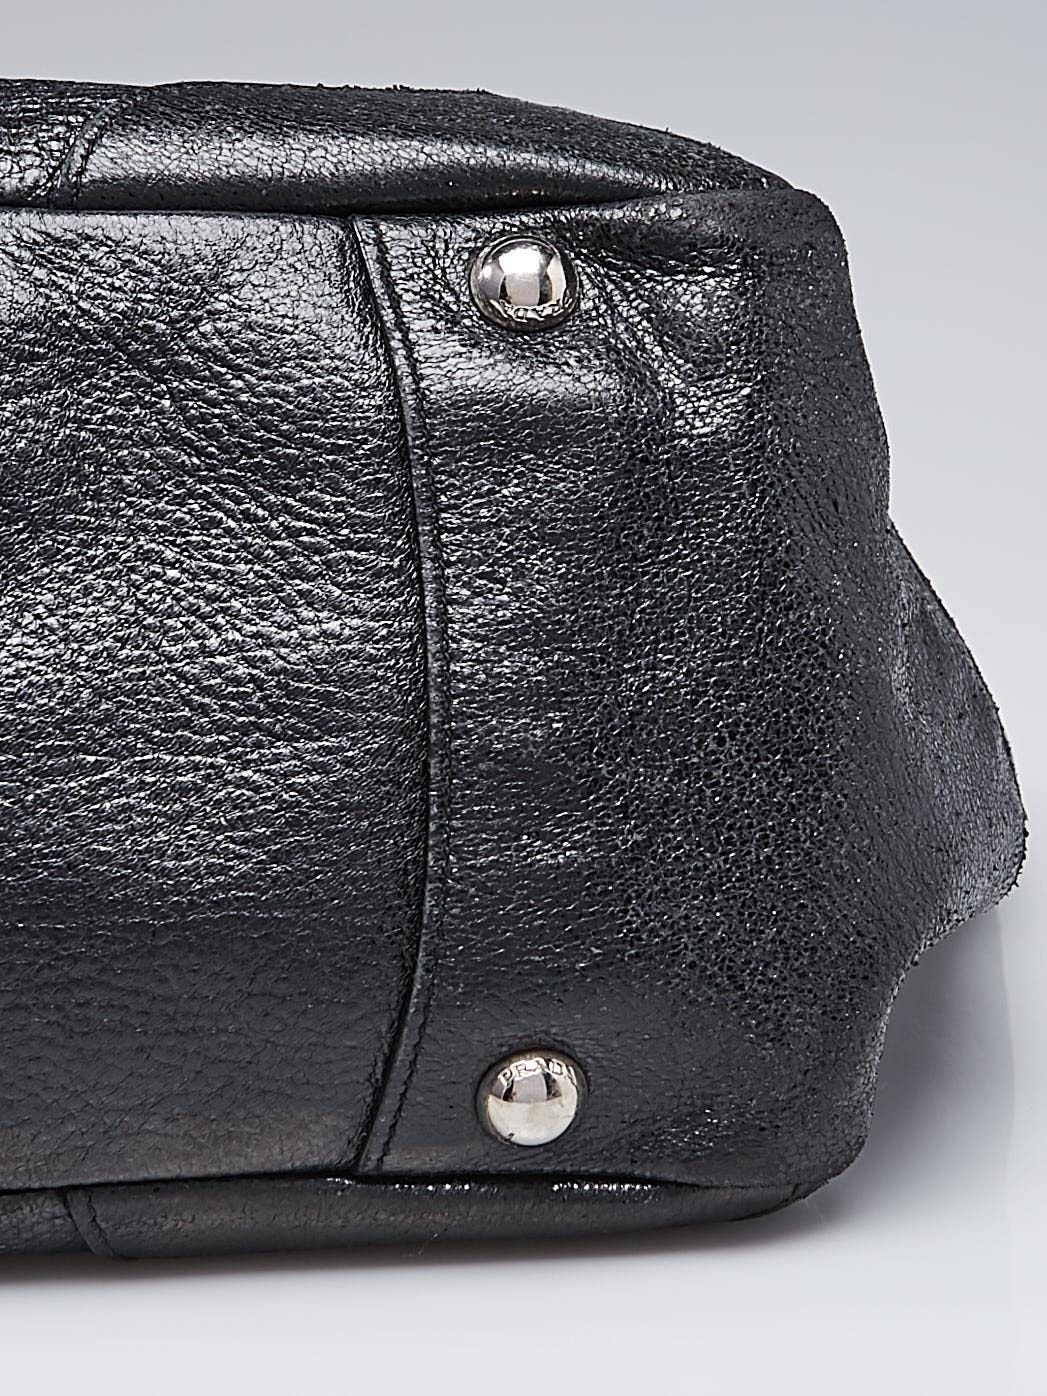 Prada Cervo Lux Black Large Chain Shopping Tote Bag – I MISS YOU VINTAGE